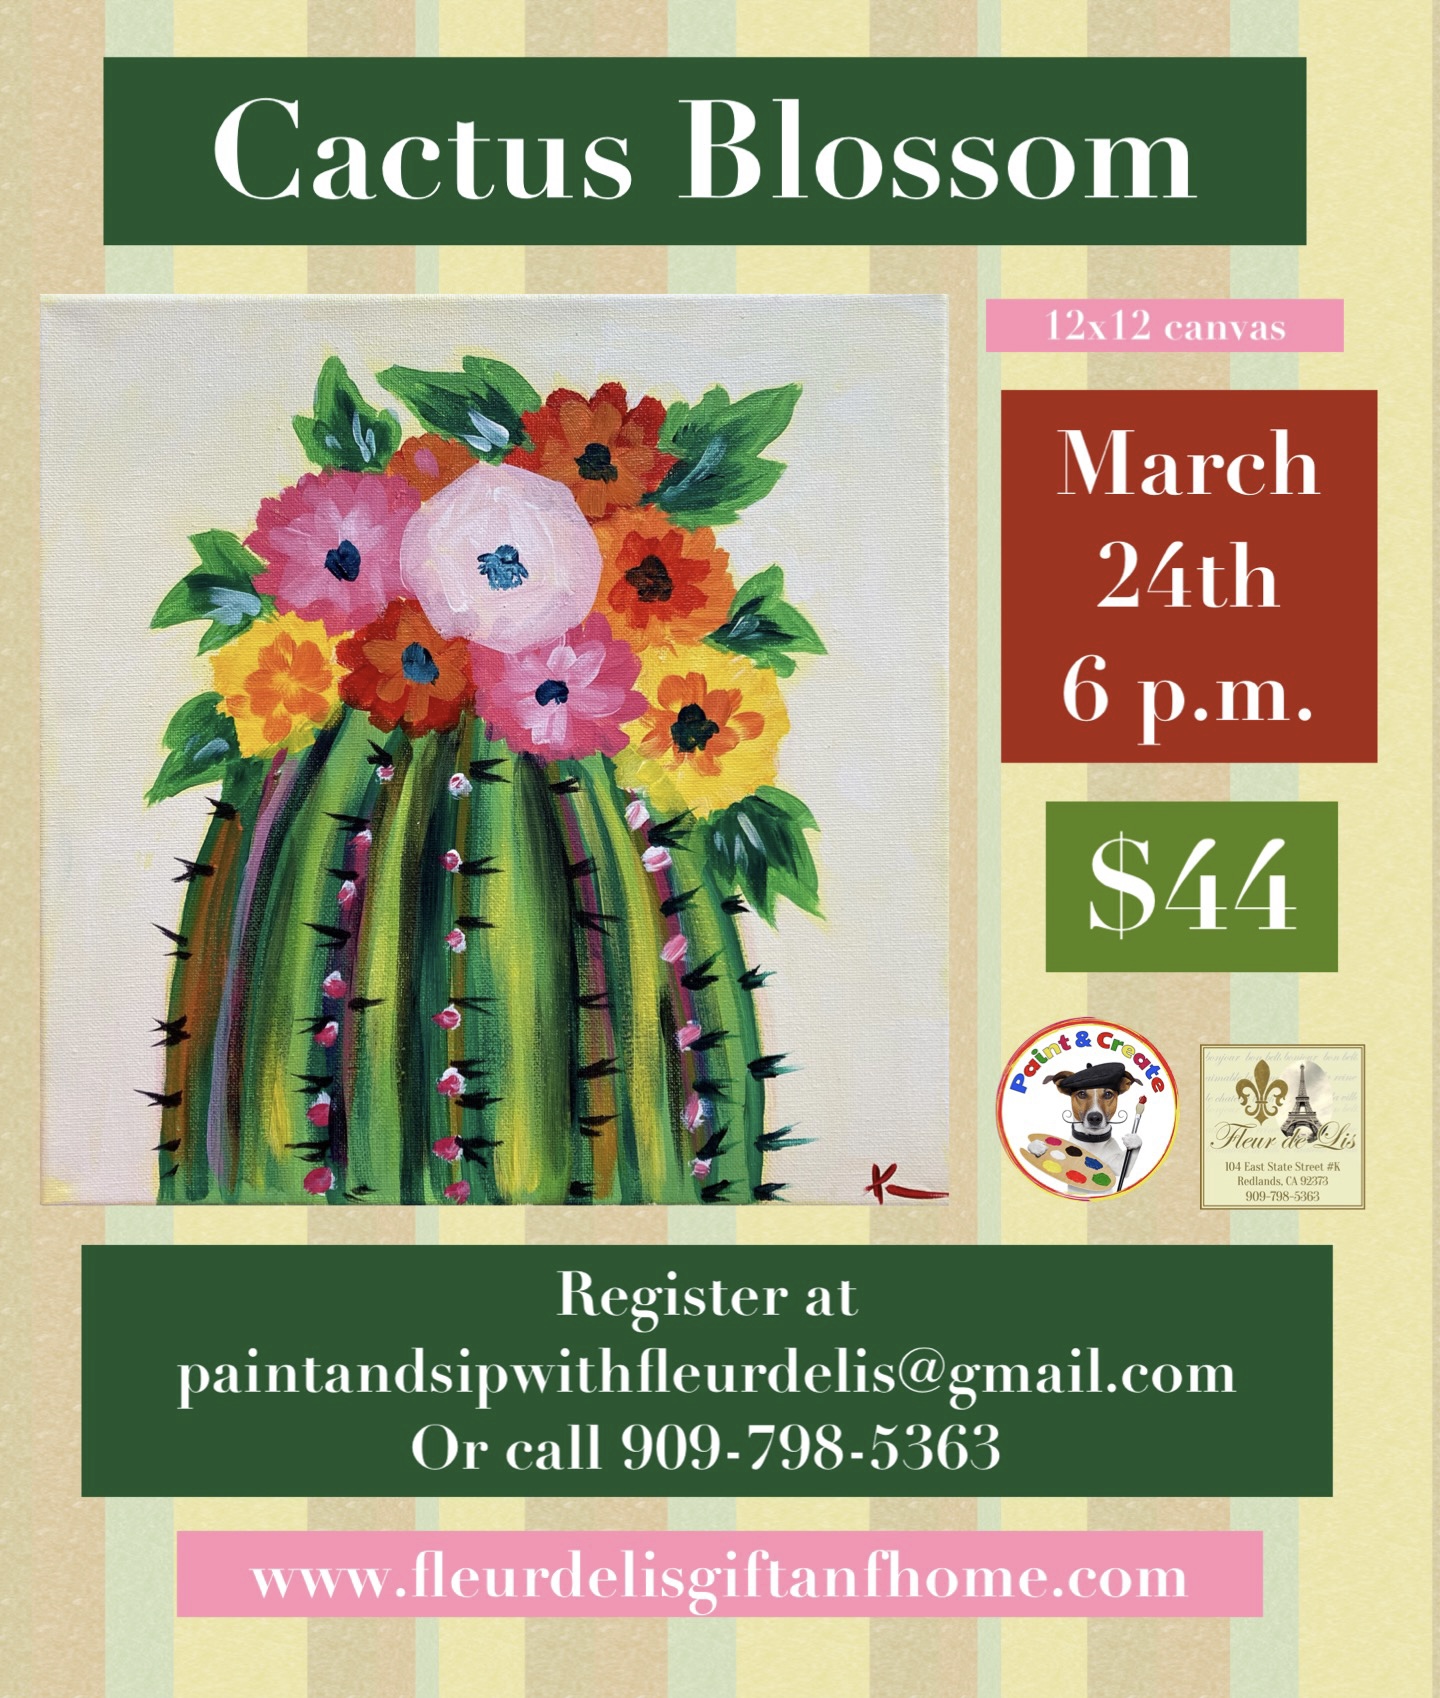 Cactus Blossom March 24th 6 p.m.